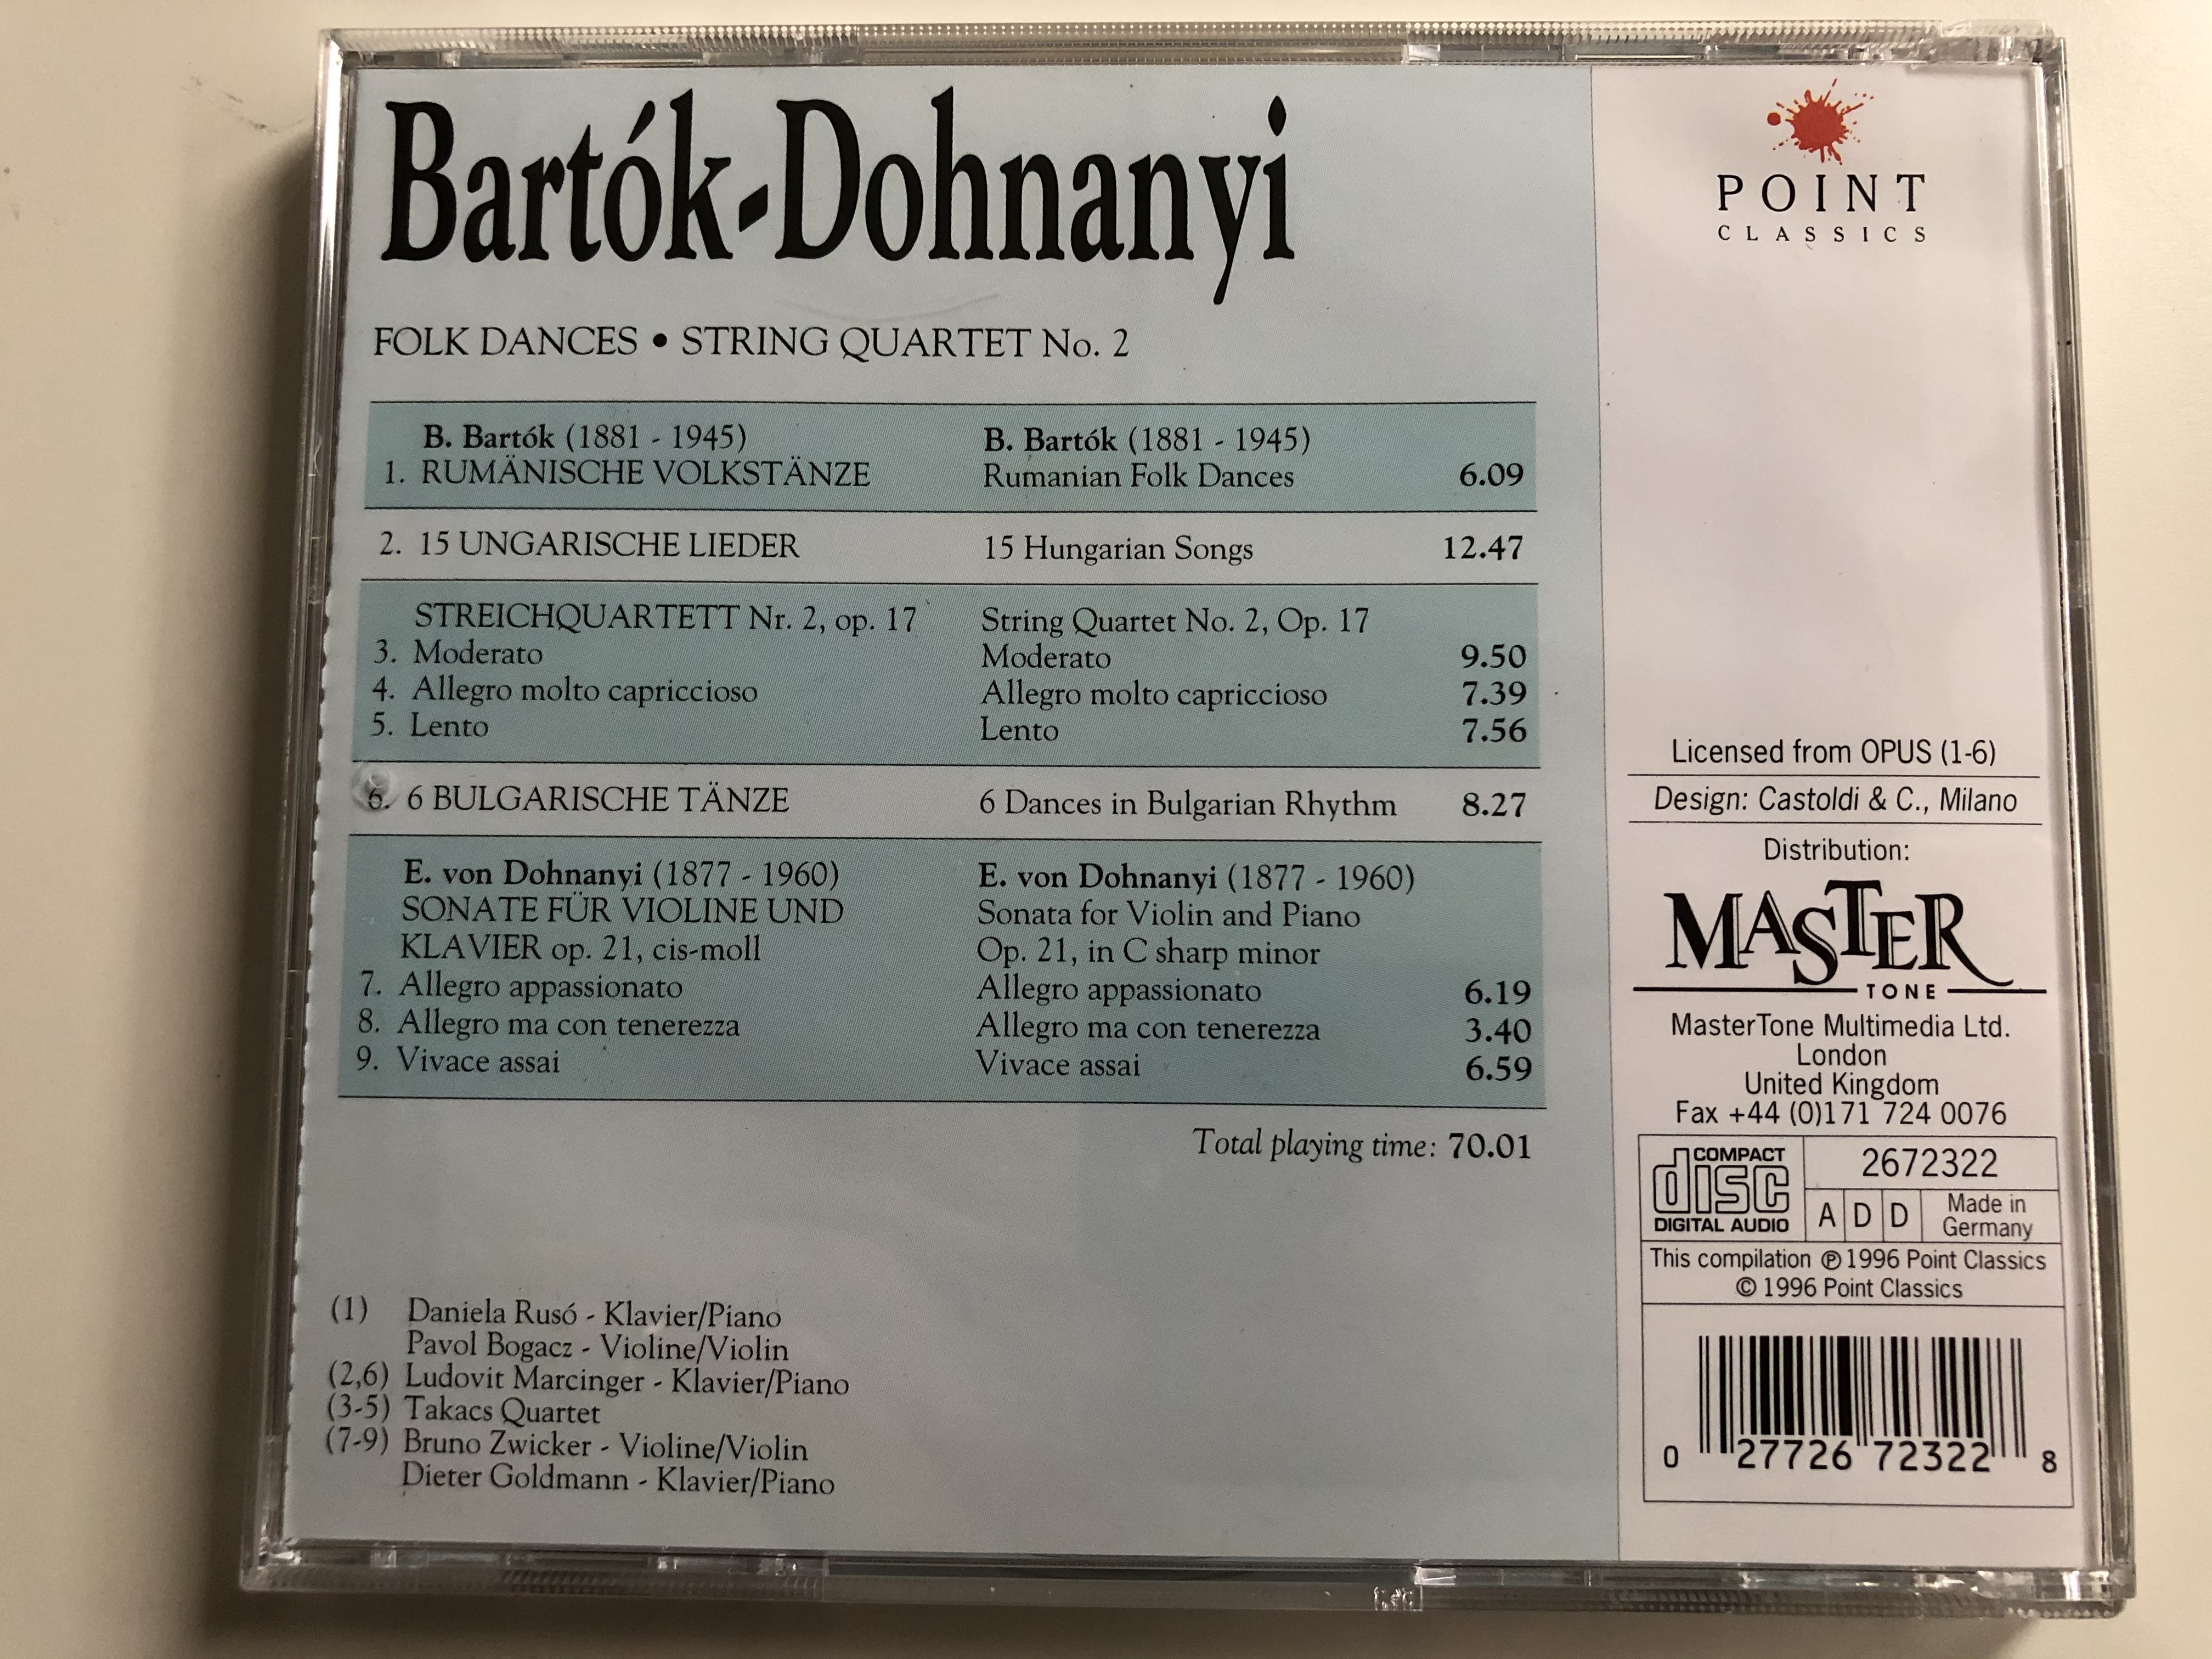 bartok-dohnanyi-folk-dances-string-quartet-no.-2-piano-daniela-ruso-ludovit-marcinger-dieter-goldmann-violin-pavol-bogacz-bruno-zwicker-takacs-quartet-point-classics-audio-cd-1996-2672-5-.jpg